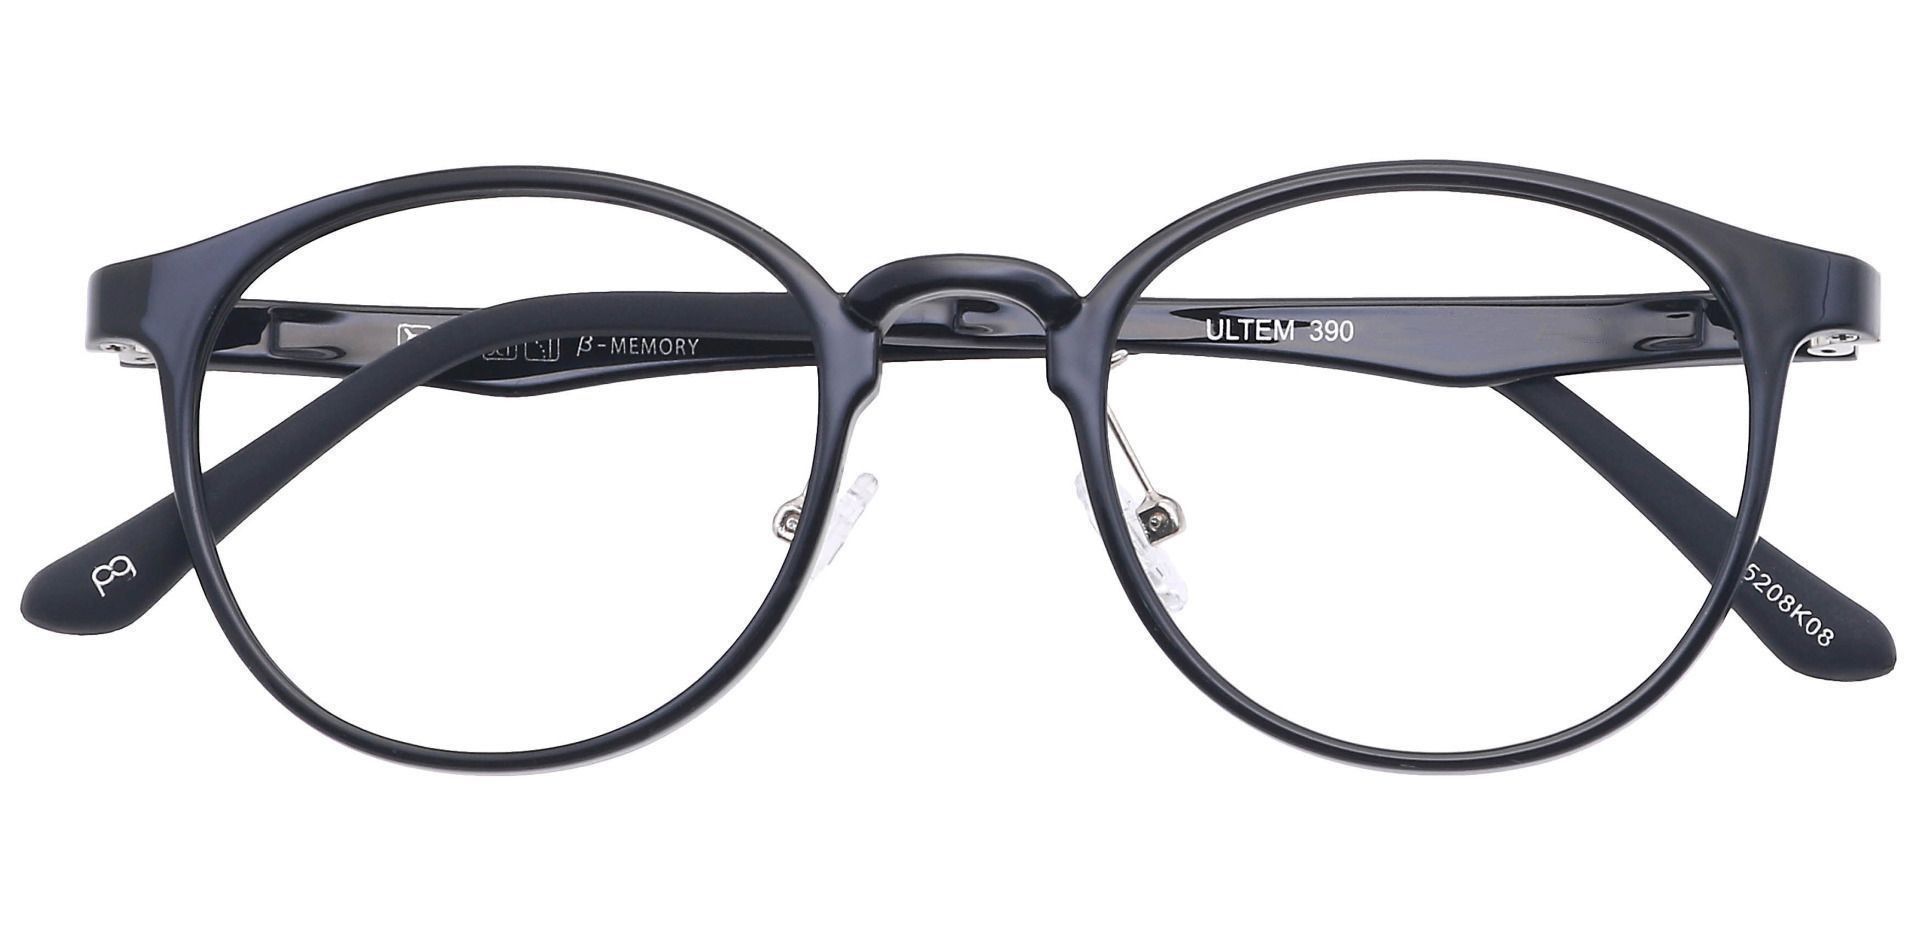 Nimbus Oval Progressive Glasses - Black